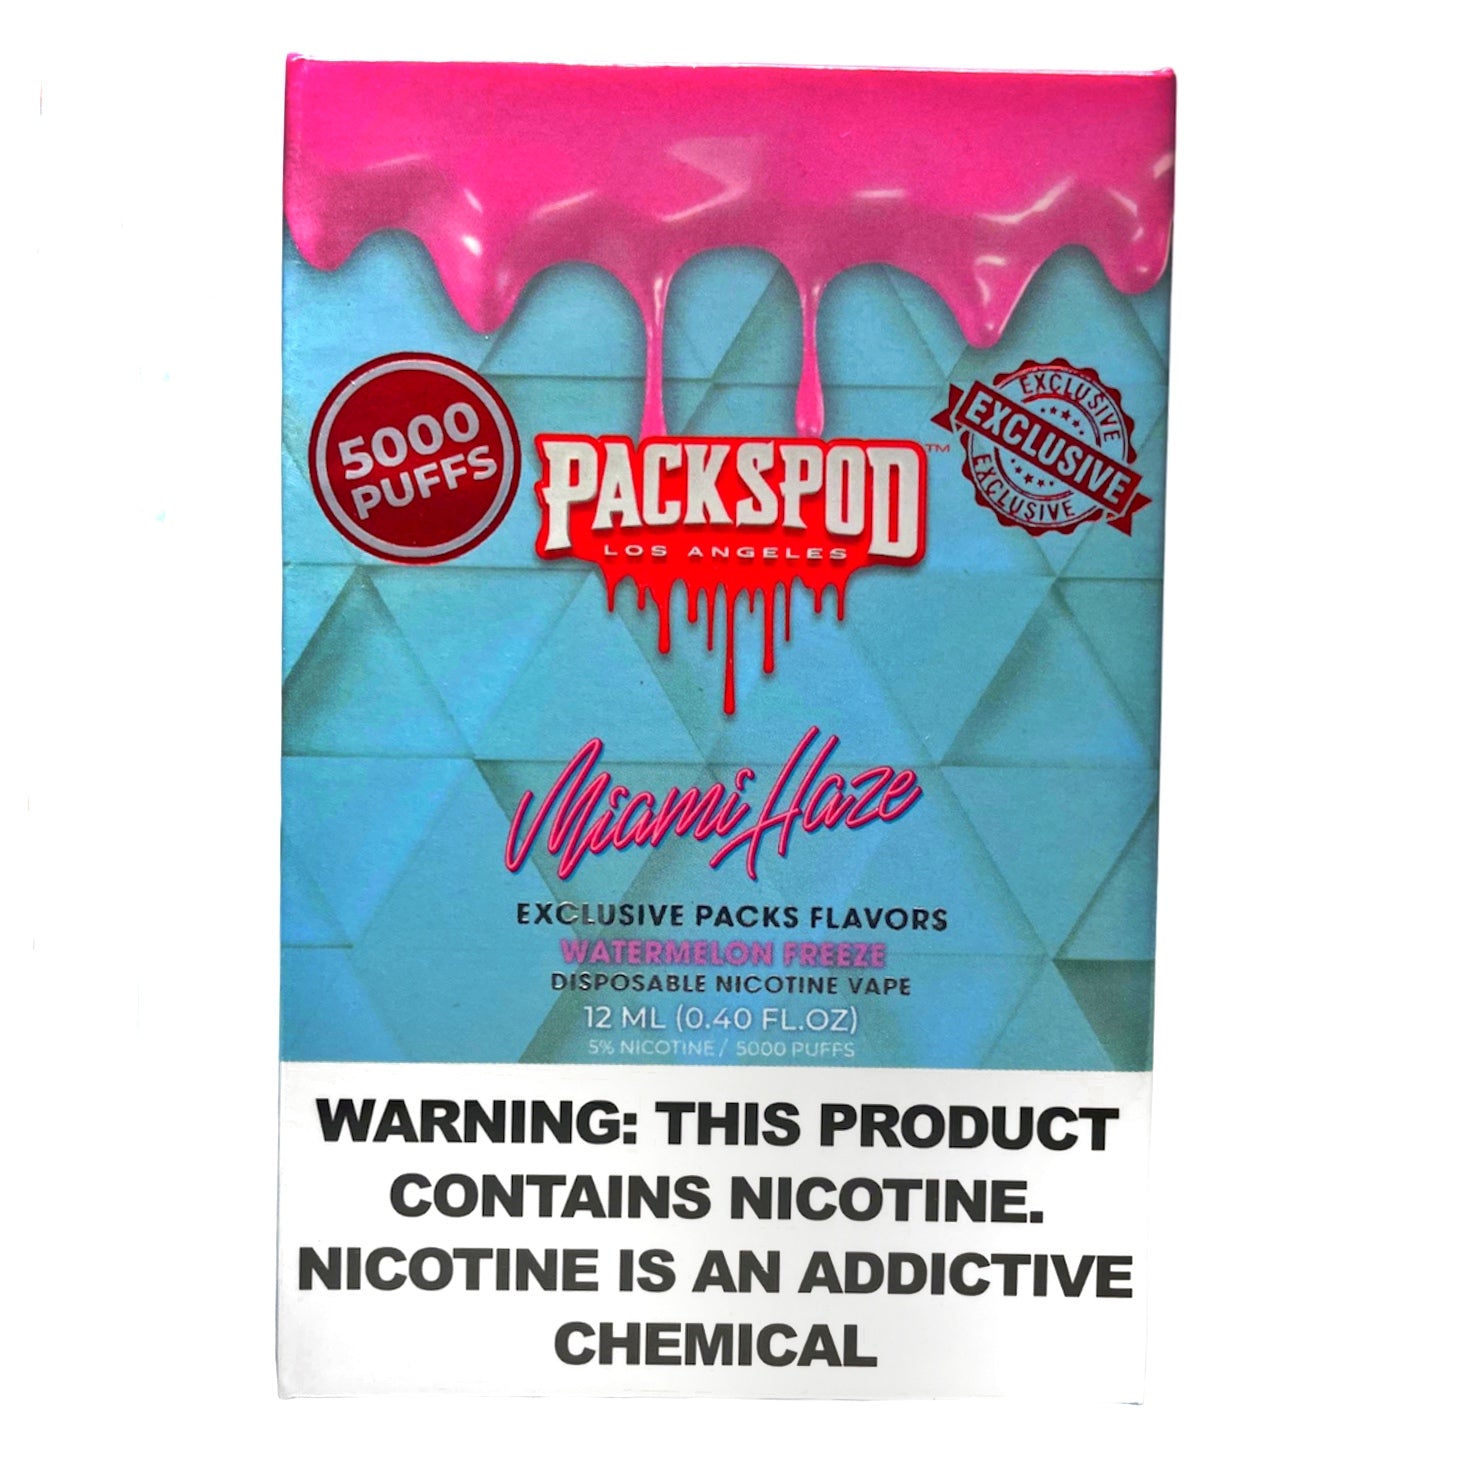 Packspod Miami Haze Flavor